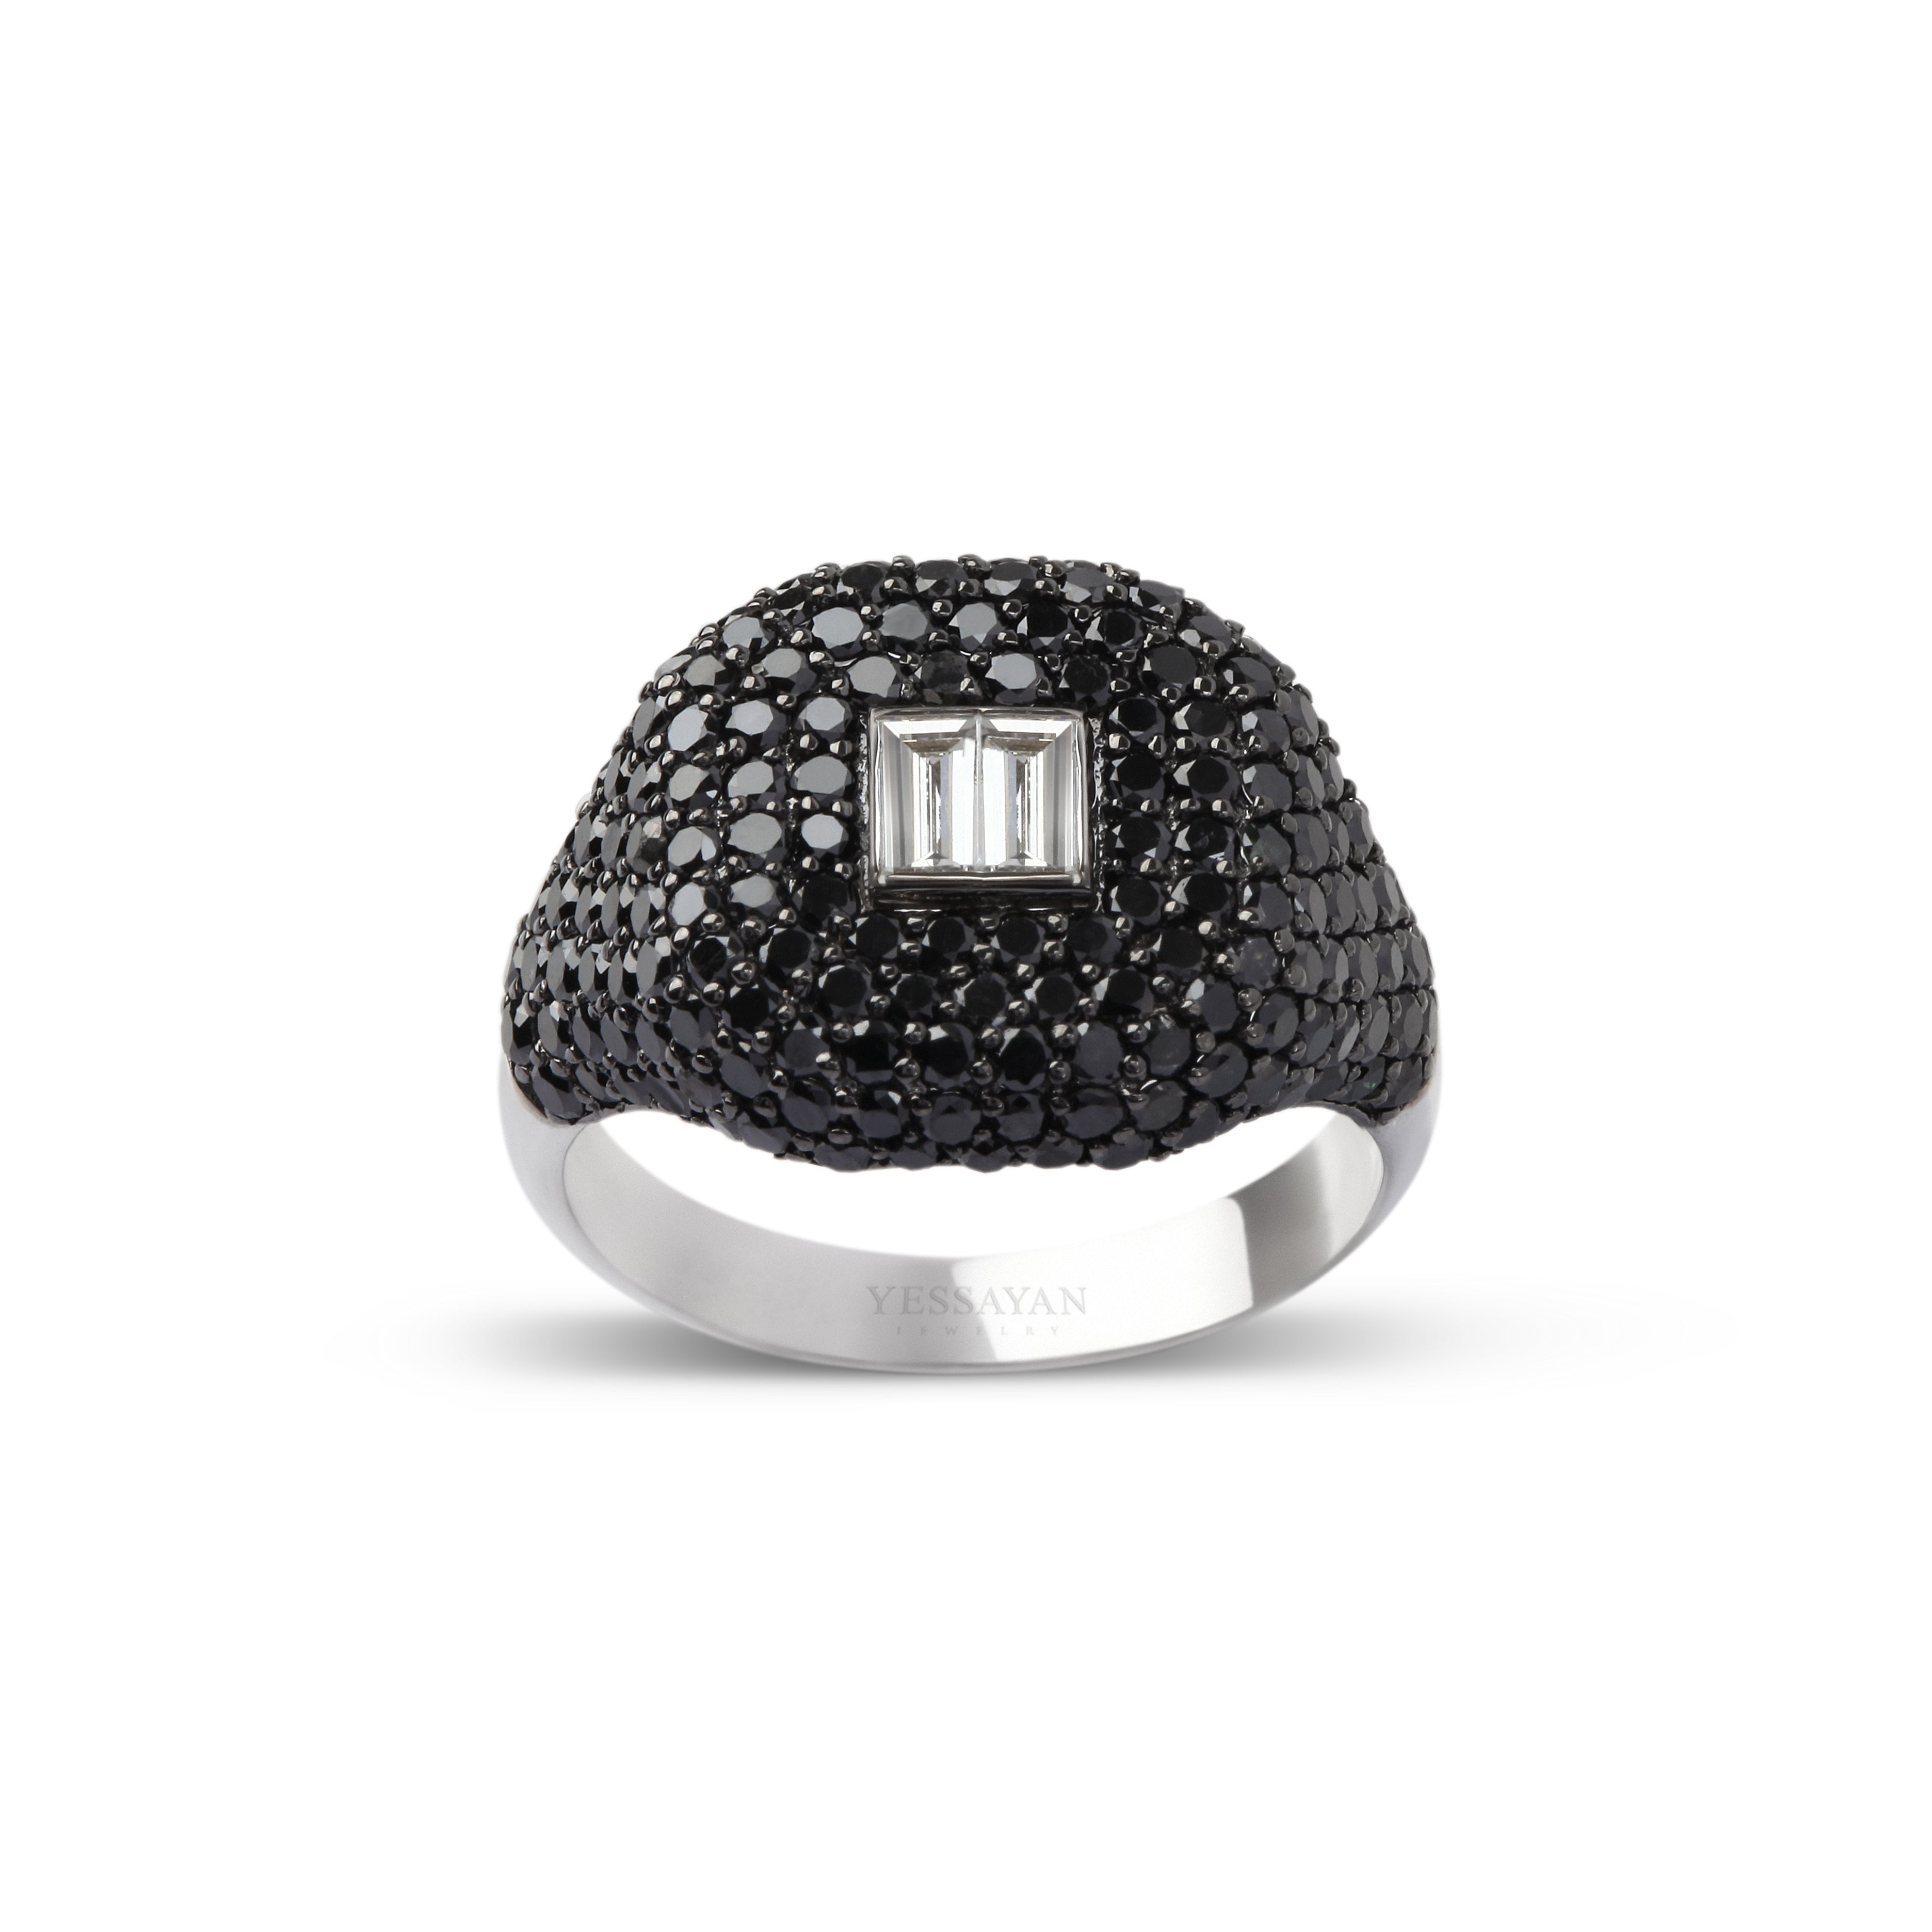 balkon hypothese converteerbaar Black Diamond & Diamond Signet Ring | Buy Rings Online – YESSAYAN.com